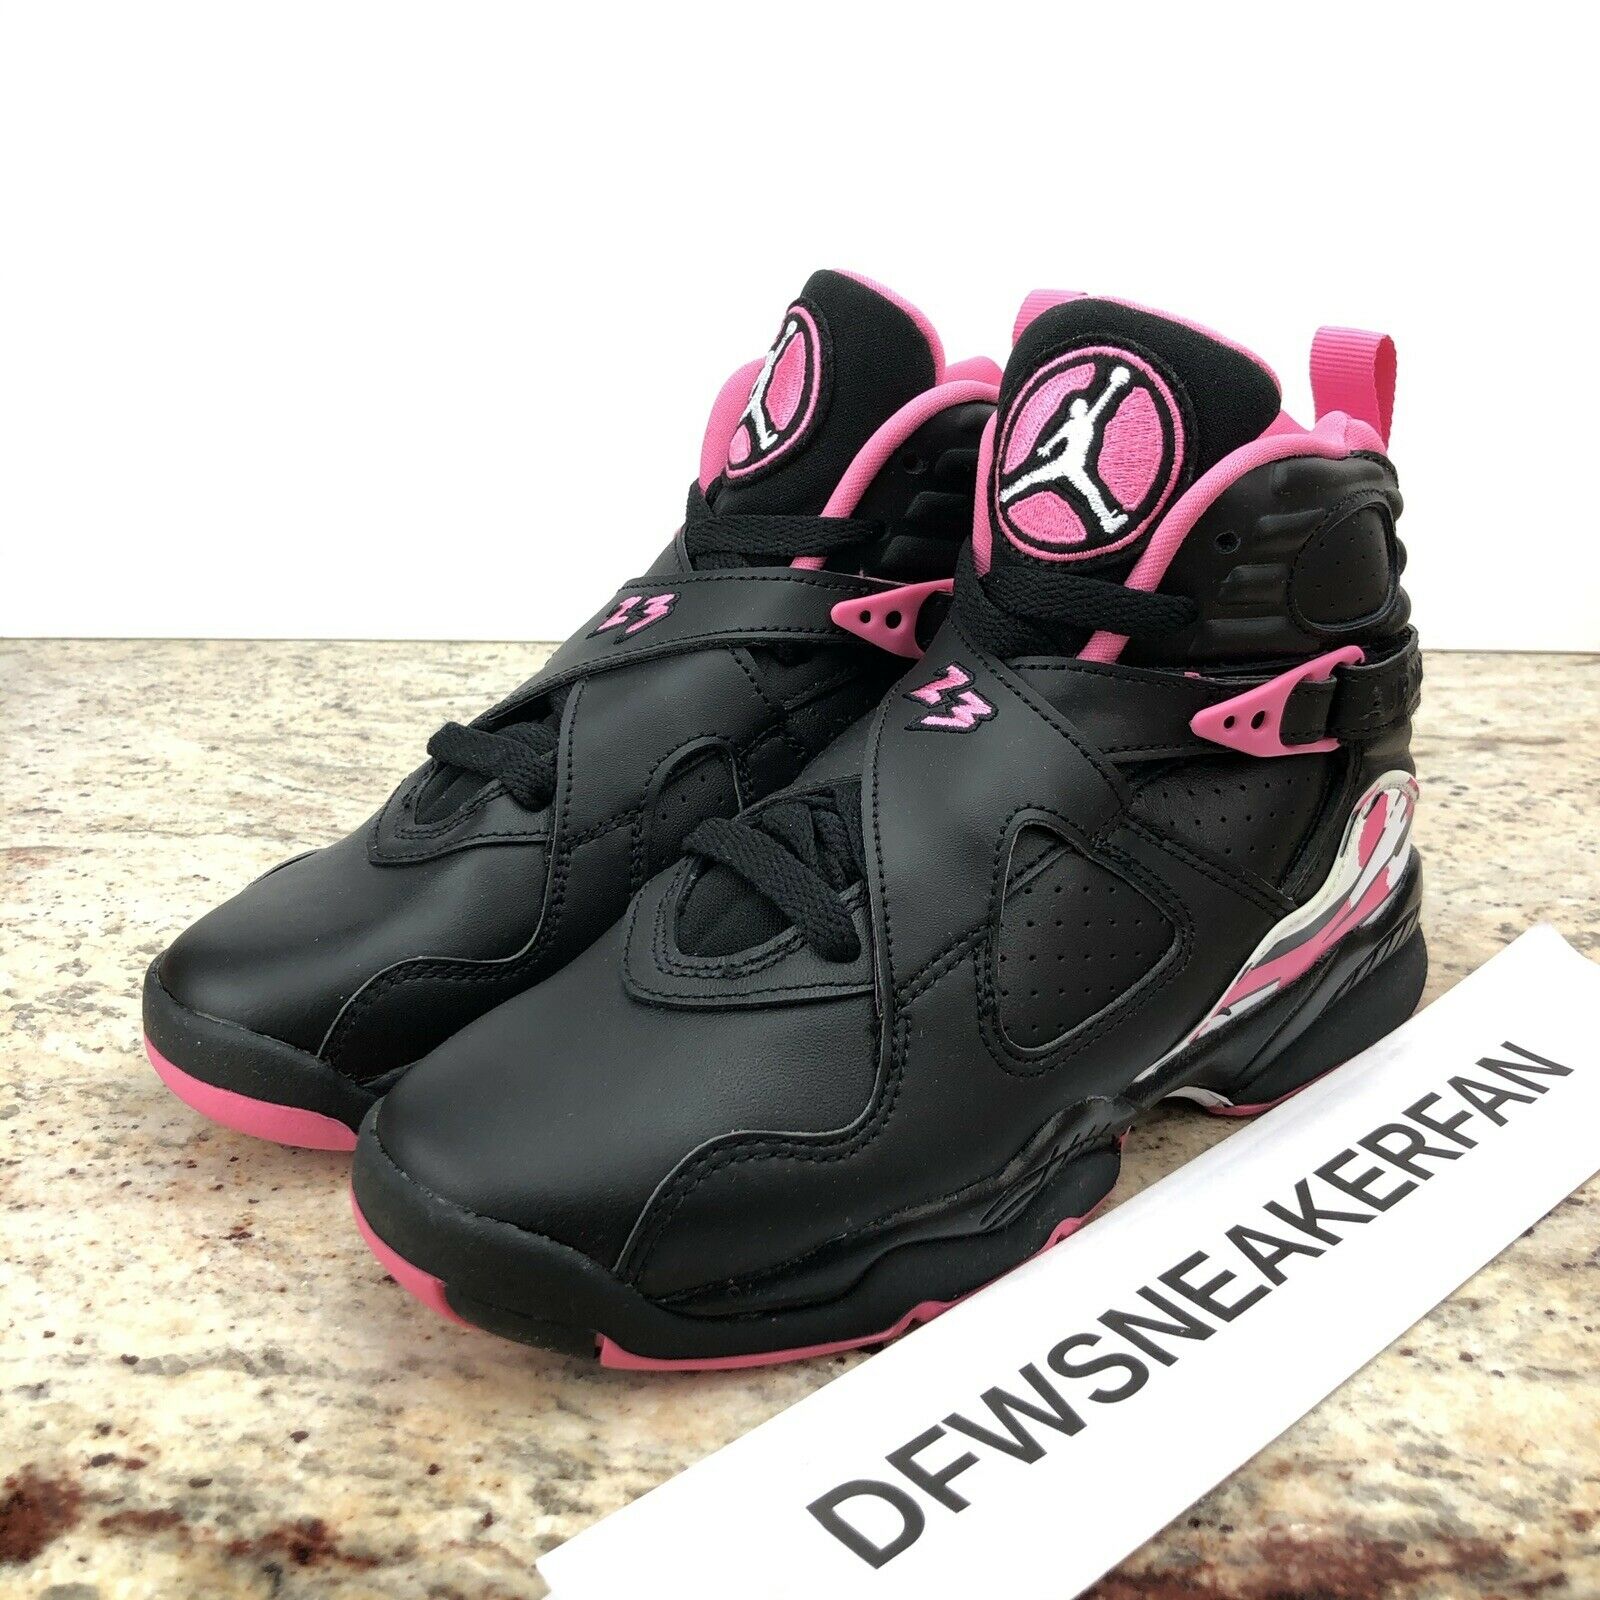 Nike Air Jordan 8 Retro (GS) Shoes BlackPink 580528-006 Size 4Y / Women’s 5.5